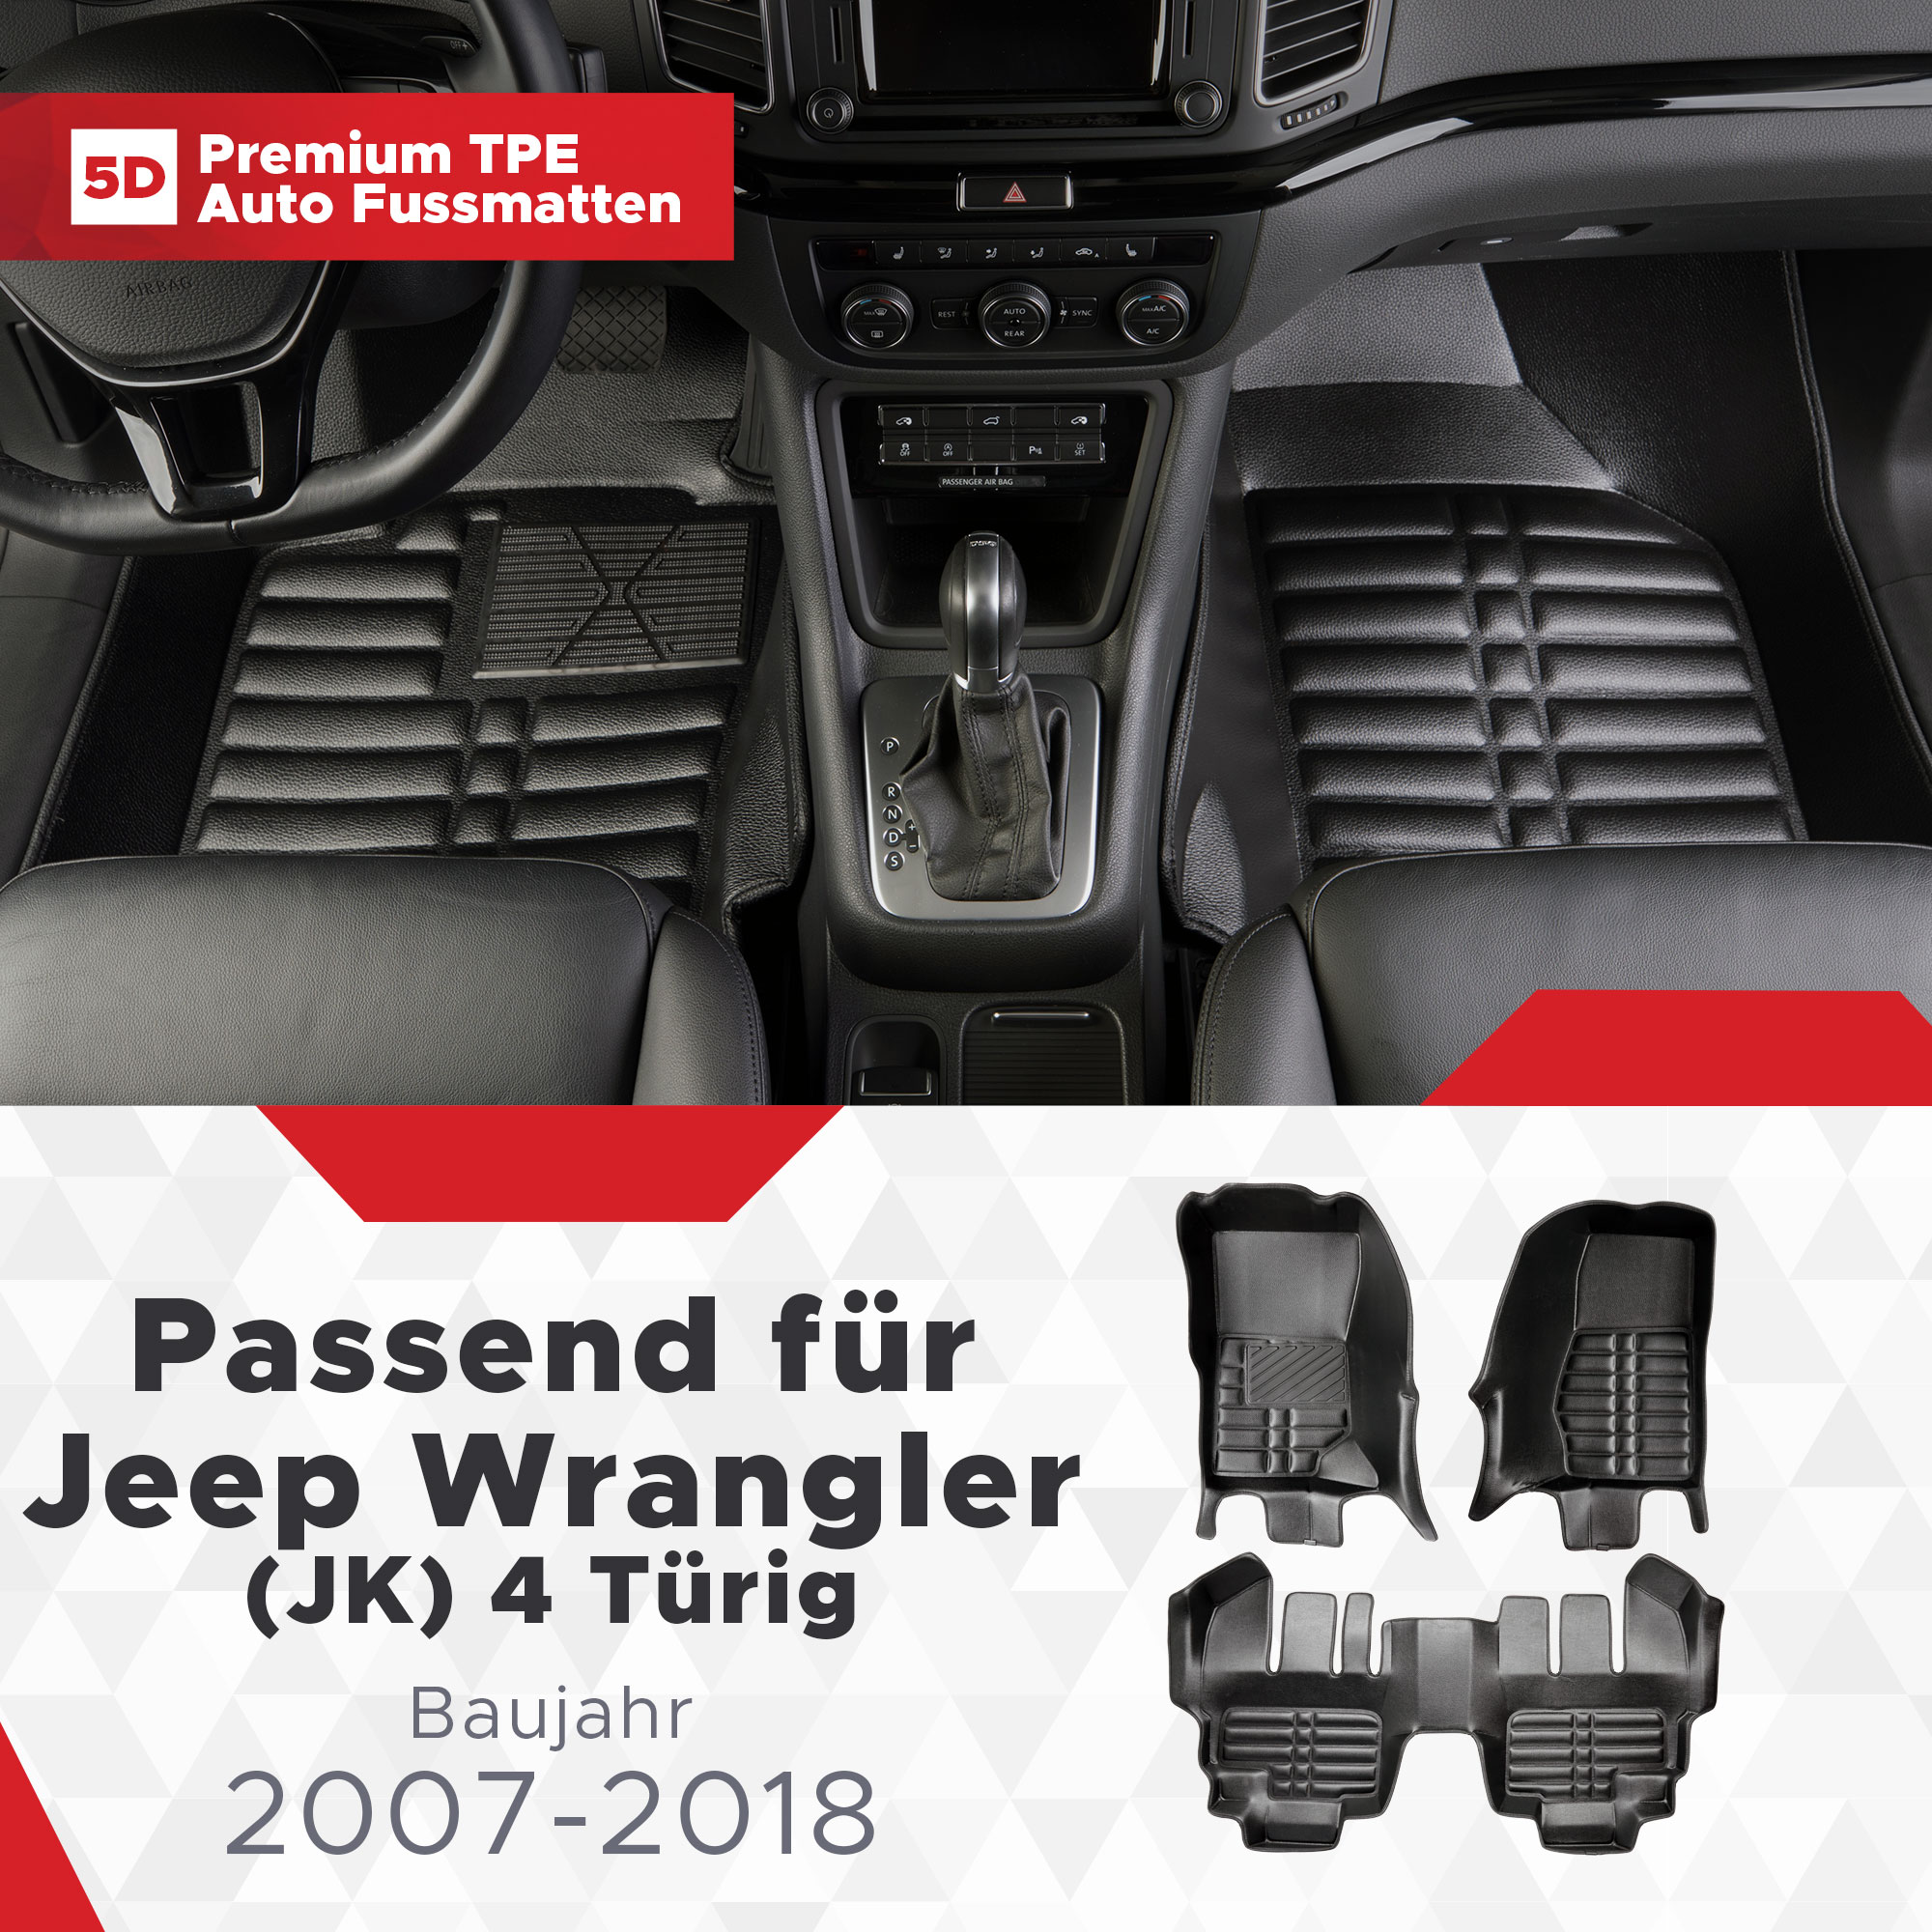 5D Jeep Wrangler 4 Türig (JK) Fussmatten Bj 2007-2018 TPE